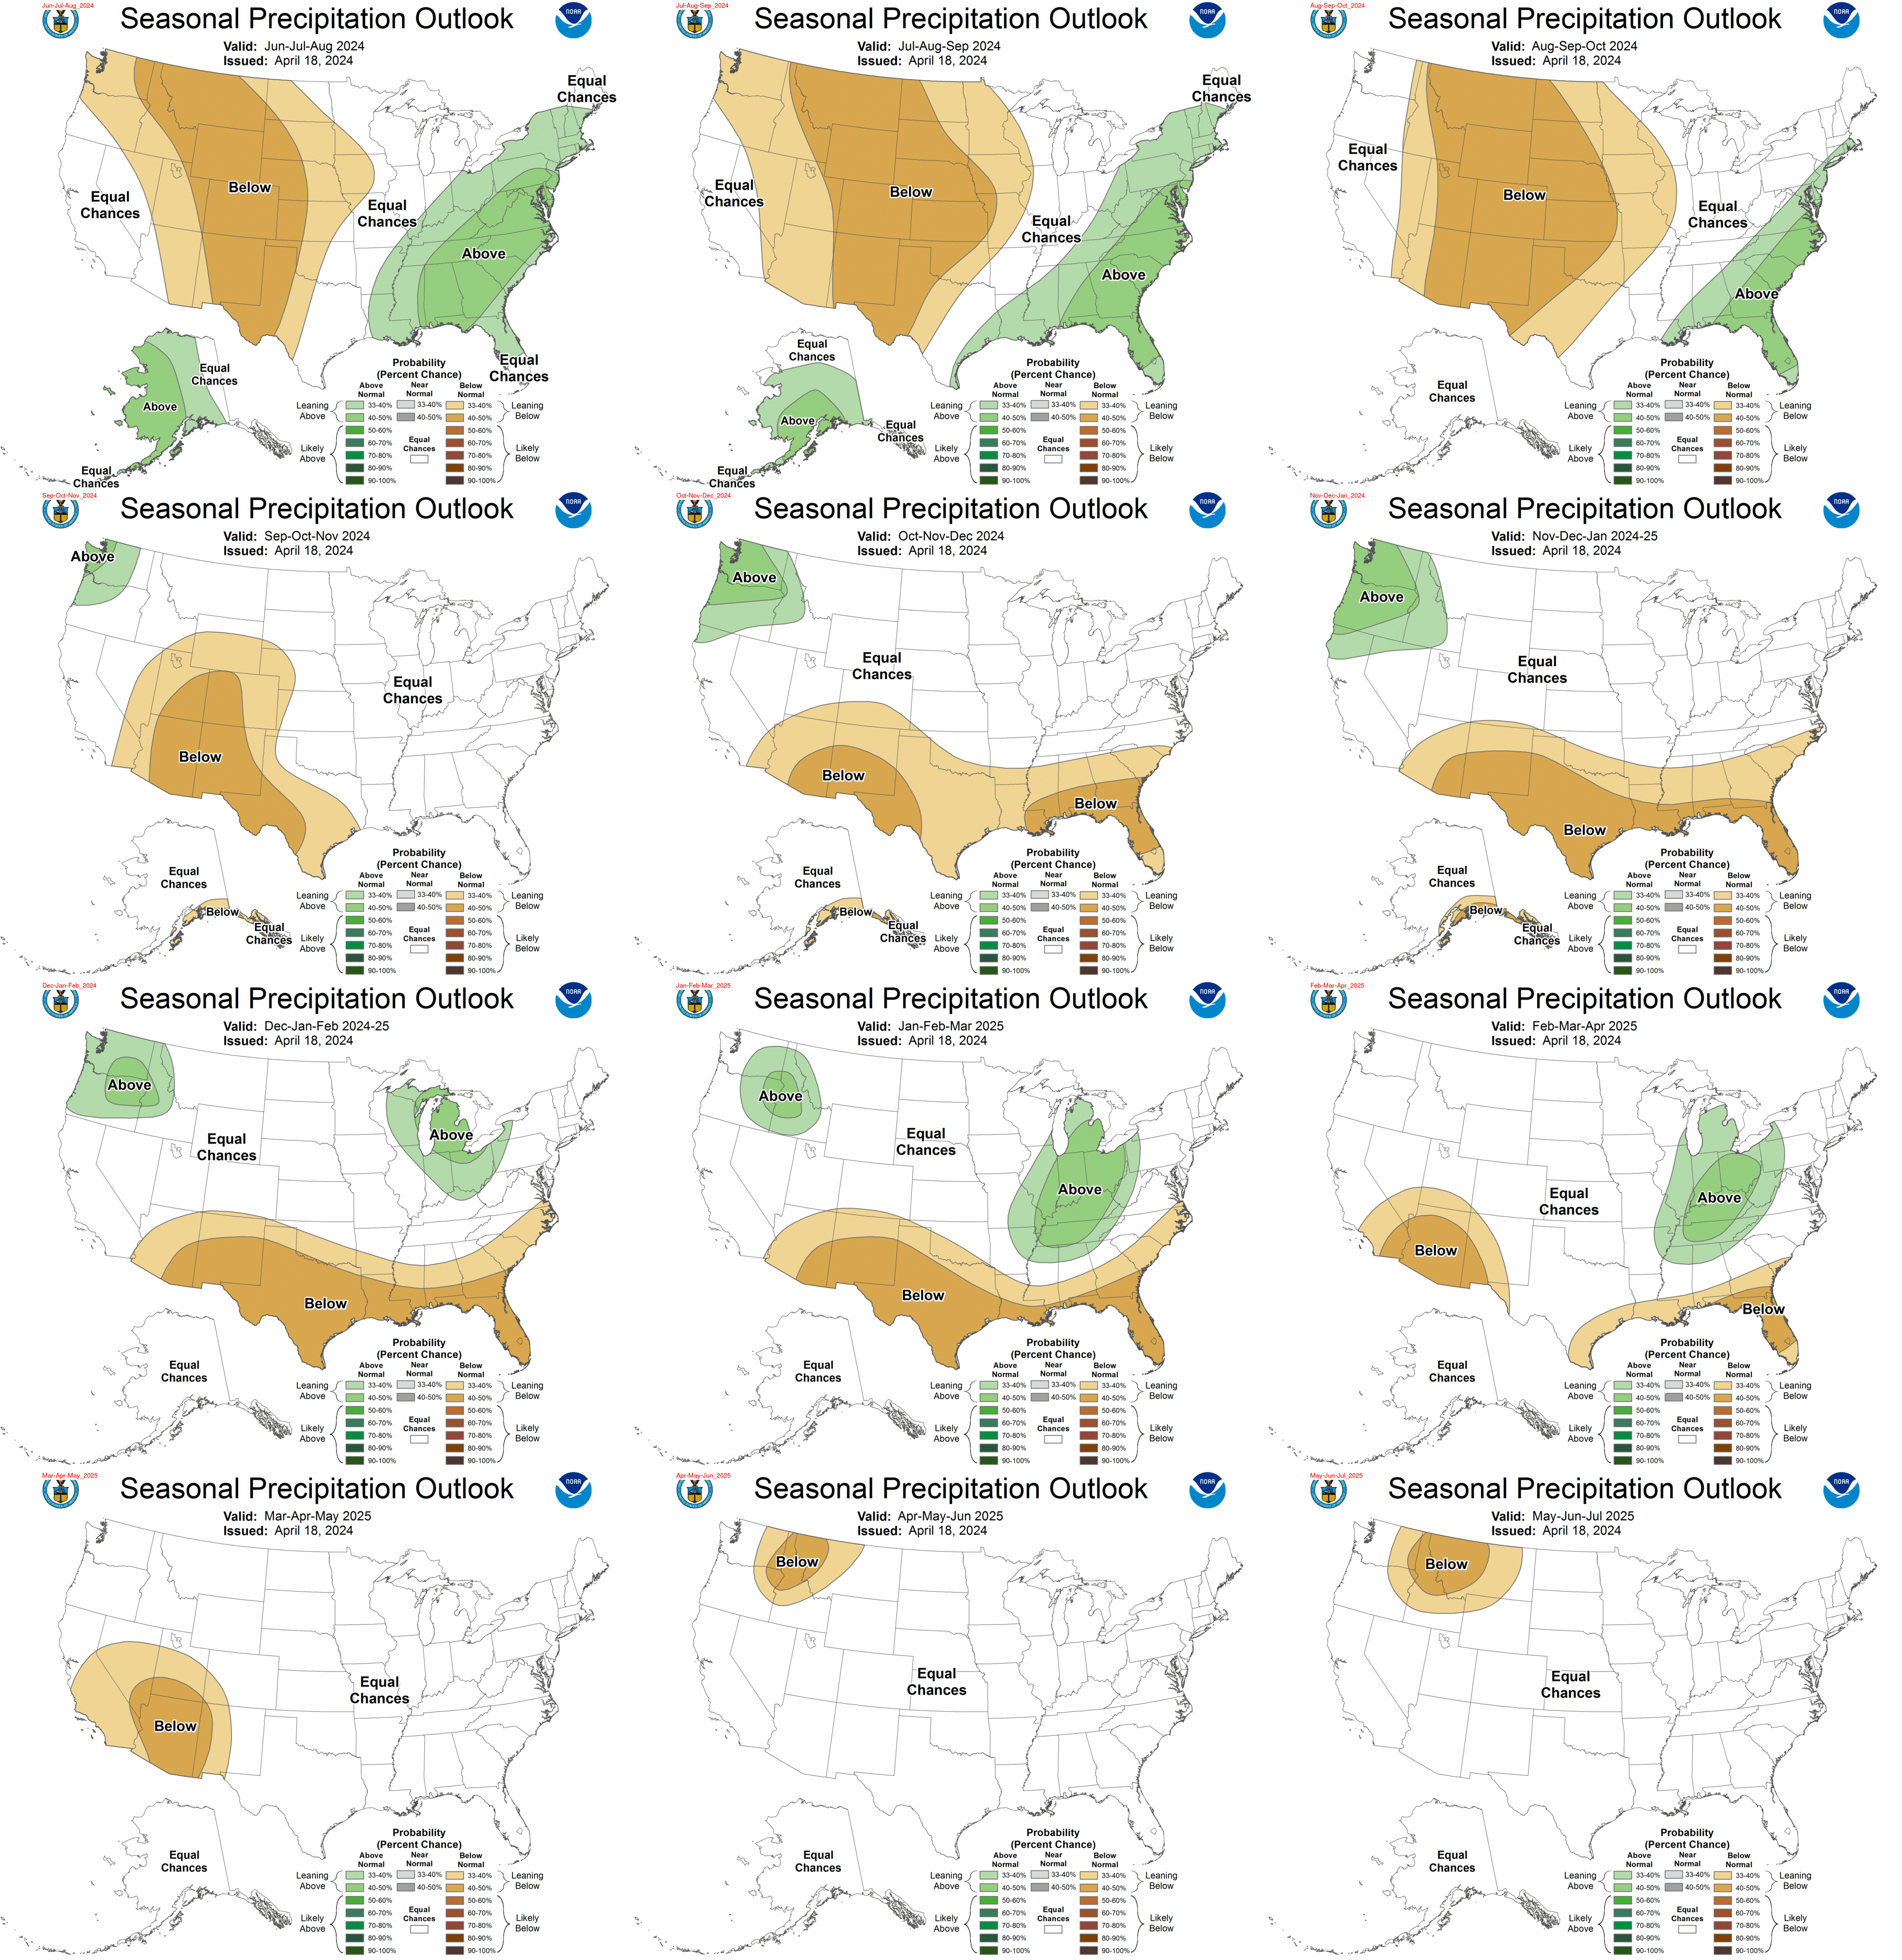 Precipitation Outlooks multi-season issued April 16, 2015